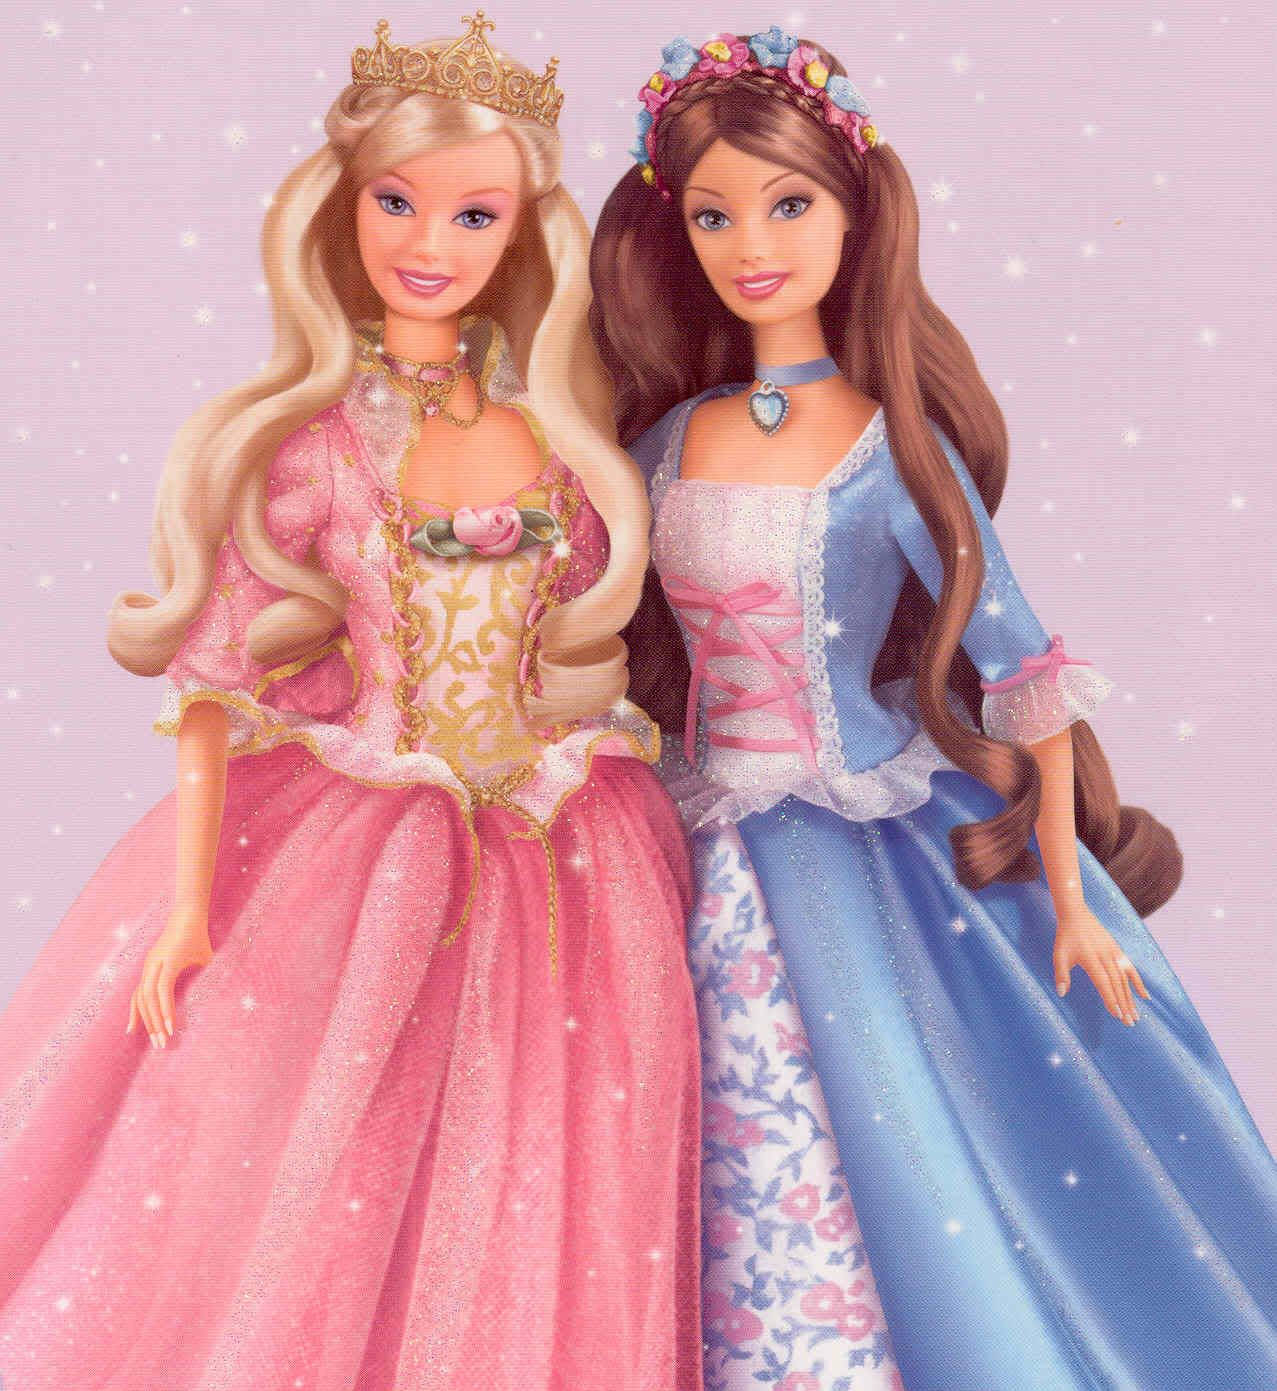 Download Barbie Princess And The Pauper Wallpaper | Wallpapers.com